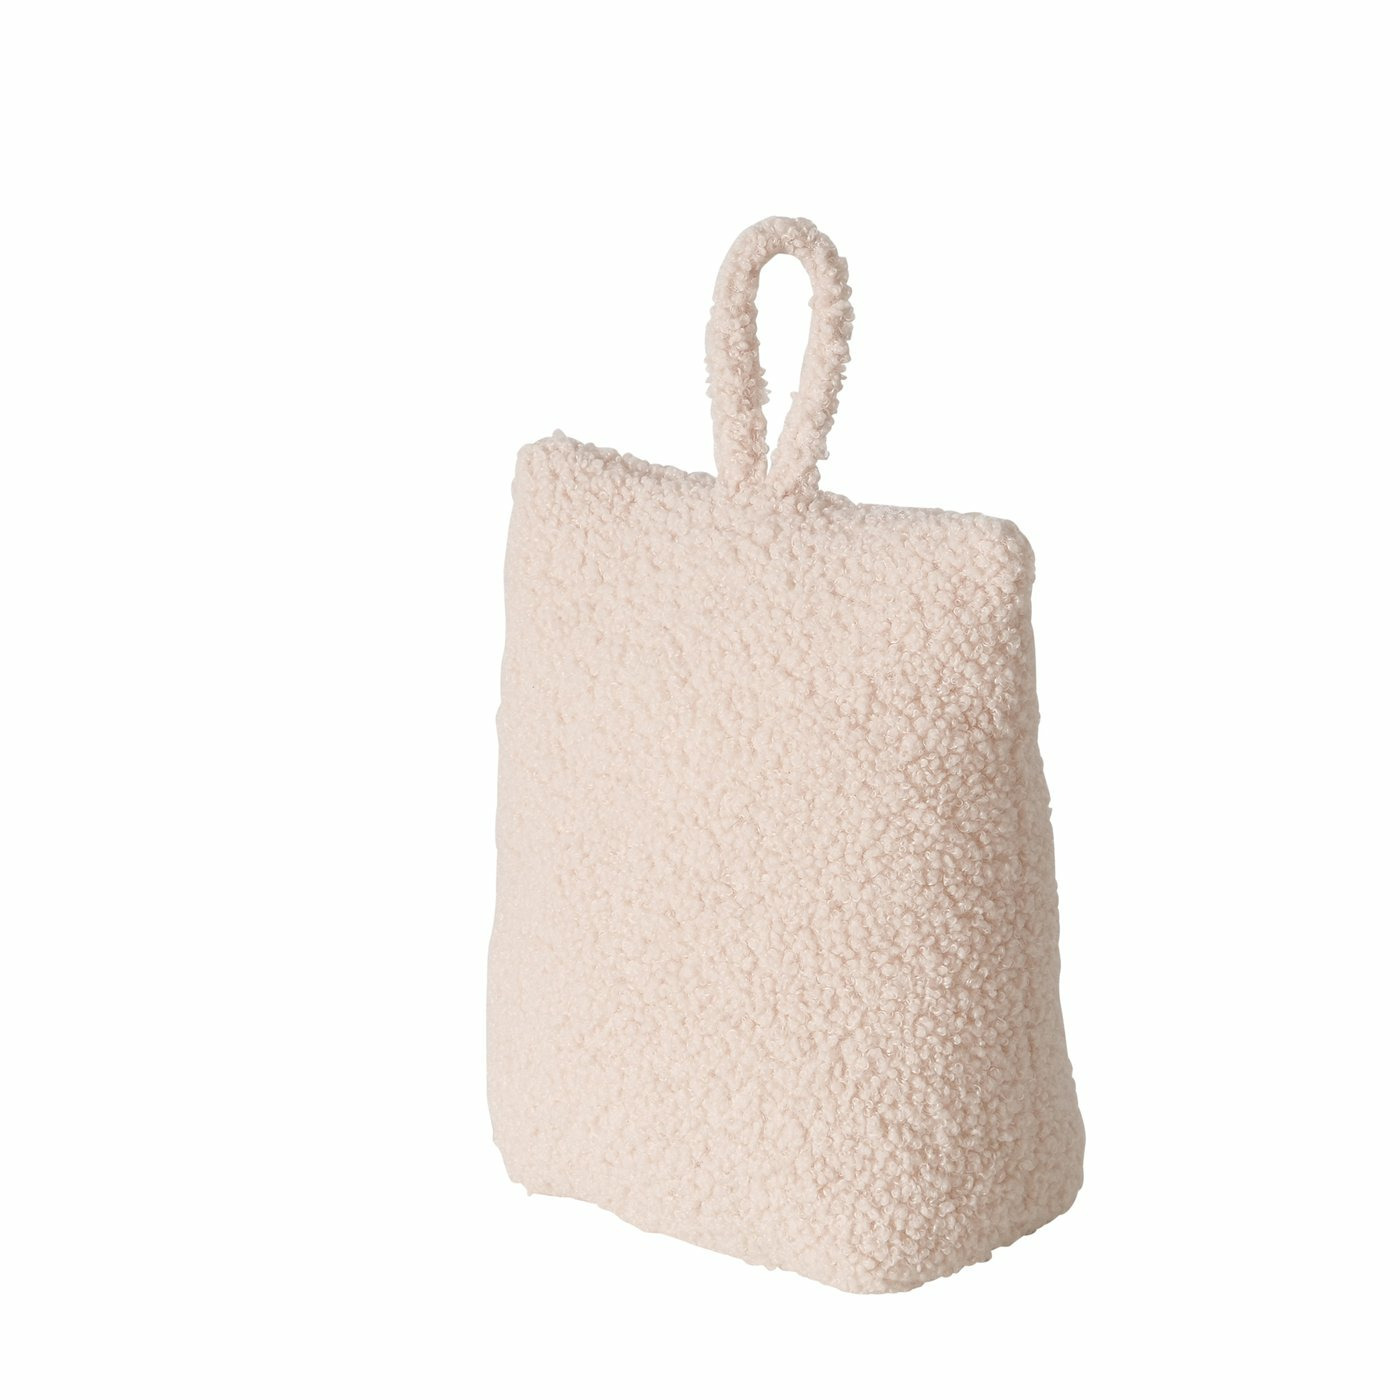 Deurstopper zak 1 kilo beige pluche-teddy stof 20 x 10 cm